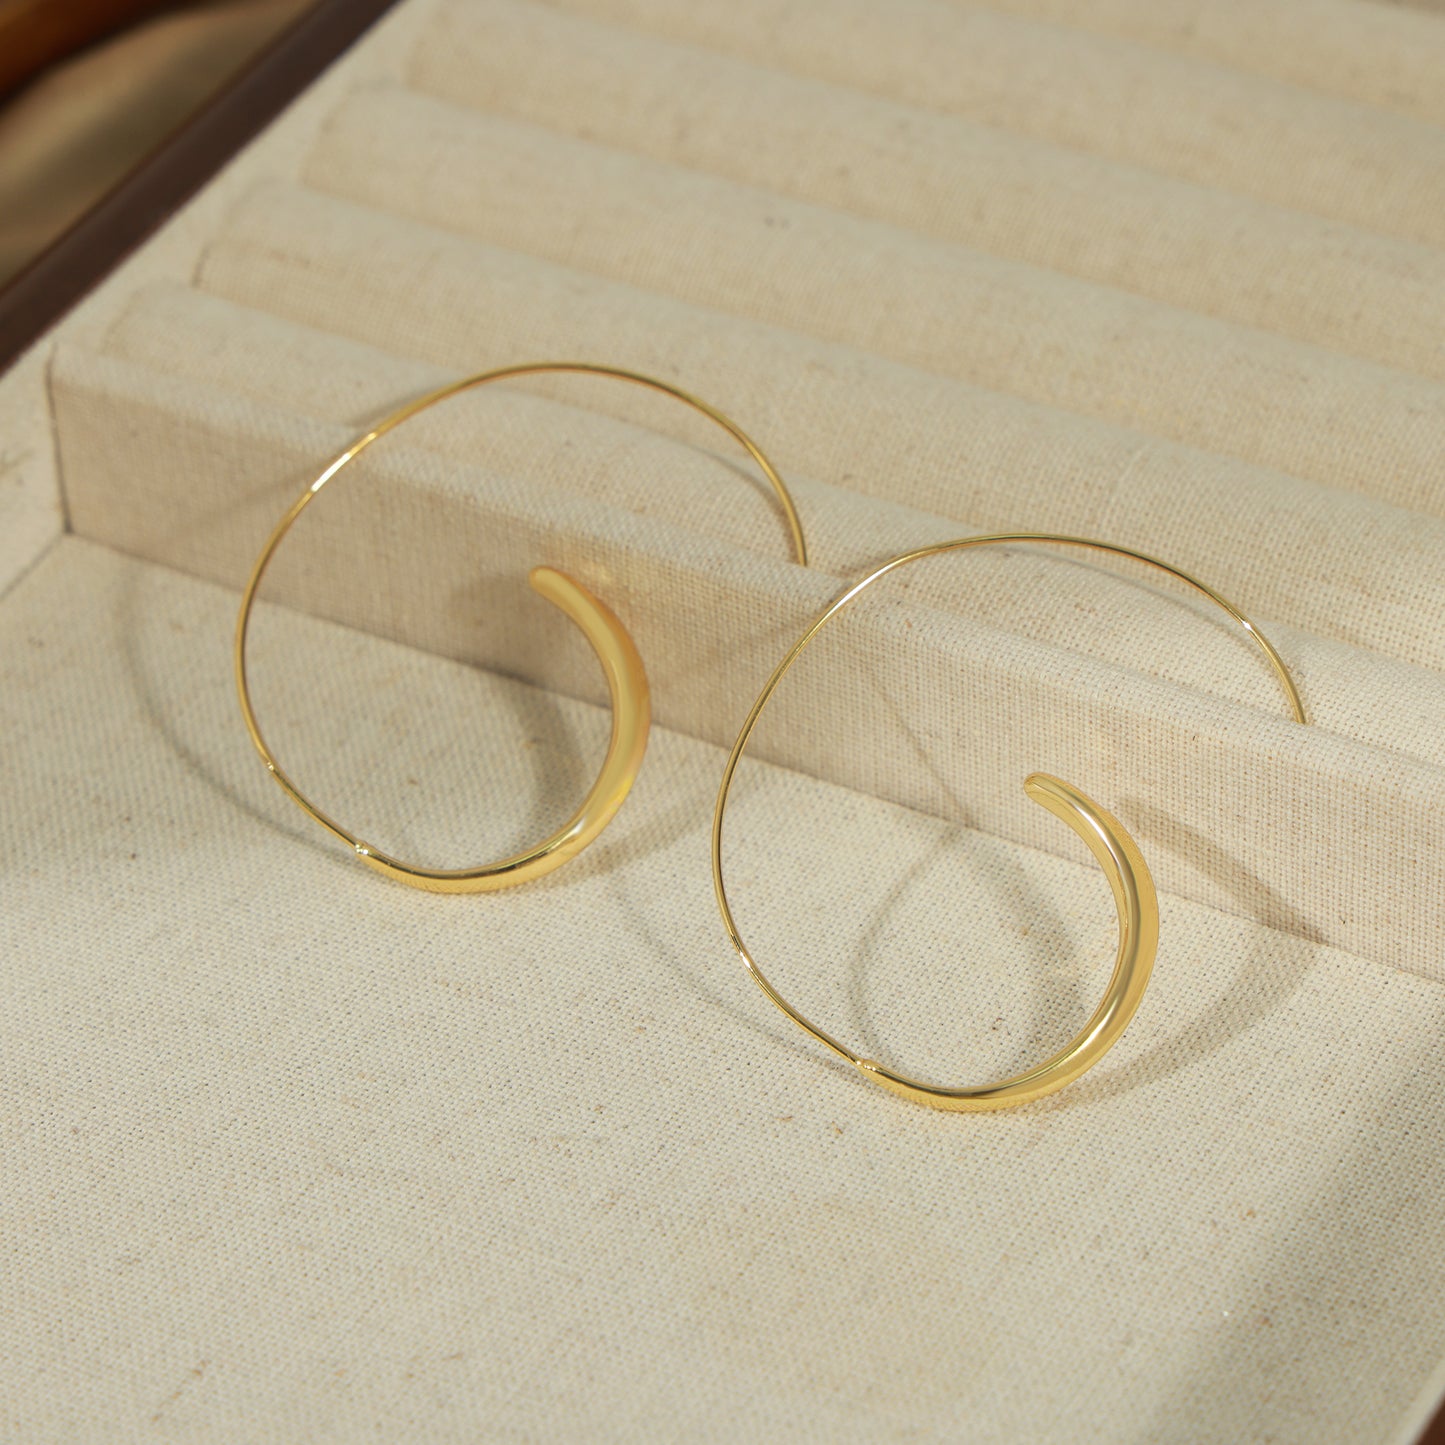 Artistic σκουλαρίκια σε γεωμετρικό στυλ από επιχρυσωμένο 18Κ χαλκό